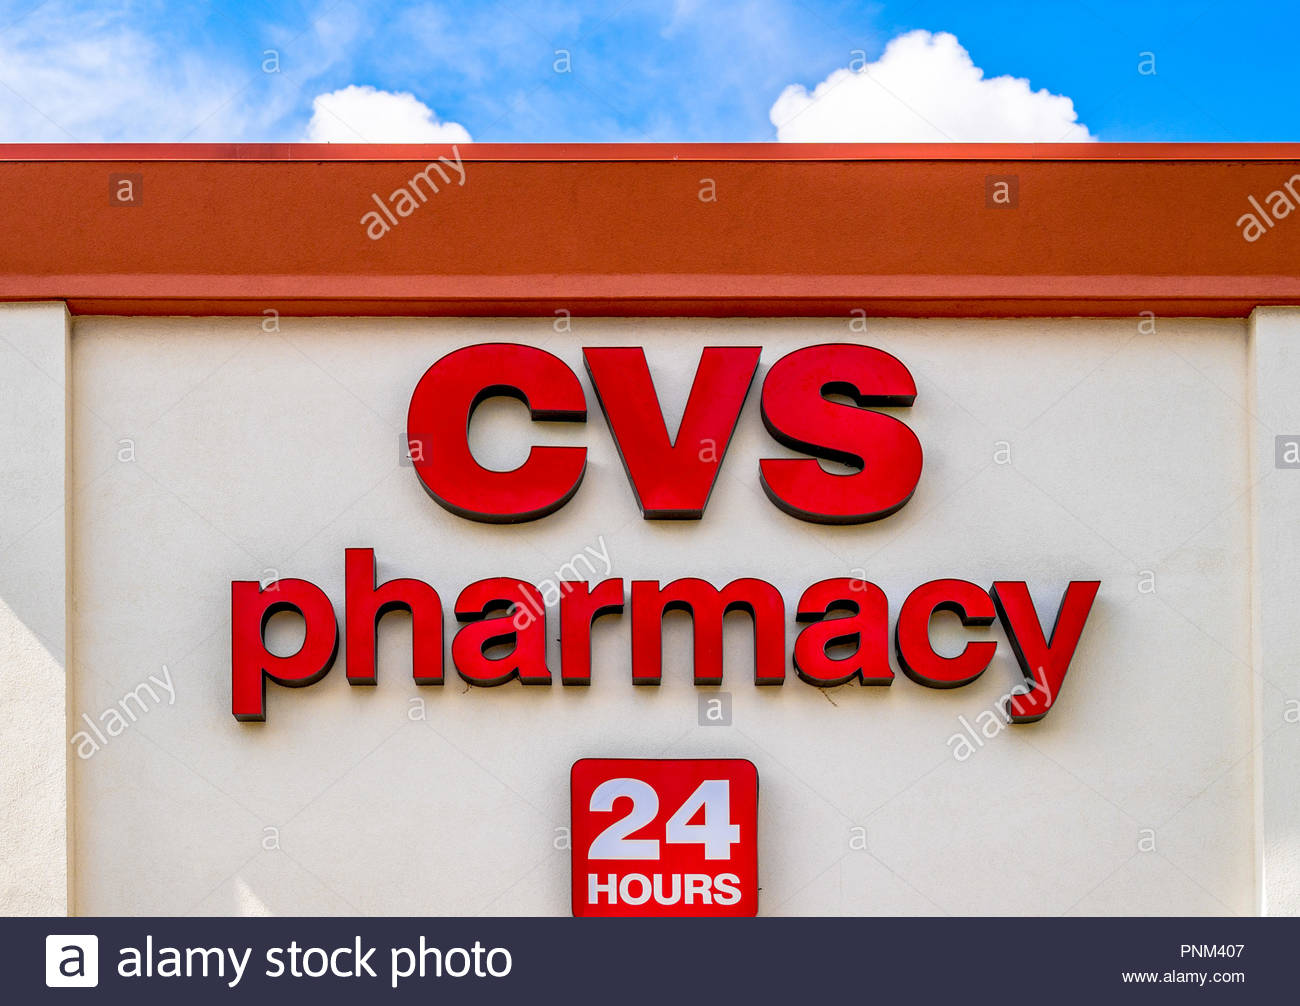 Cvs Pharmacy Stock Photos Cvs Pharmacy Stock Images Alamy